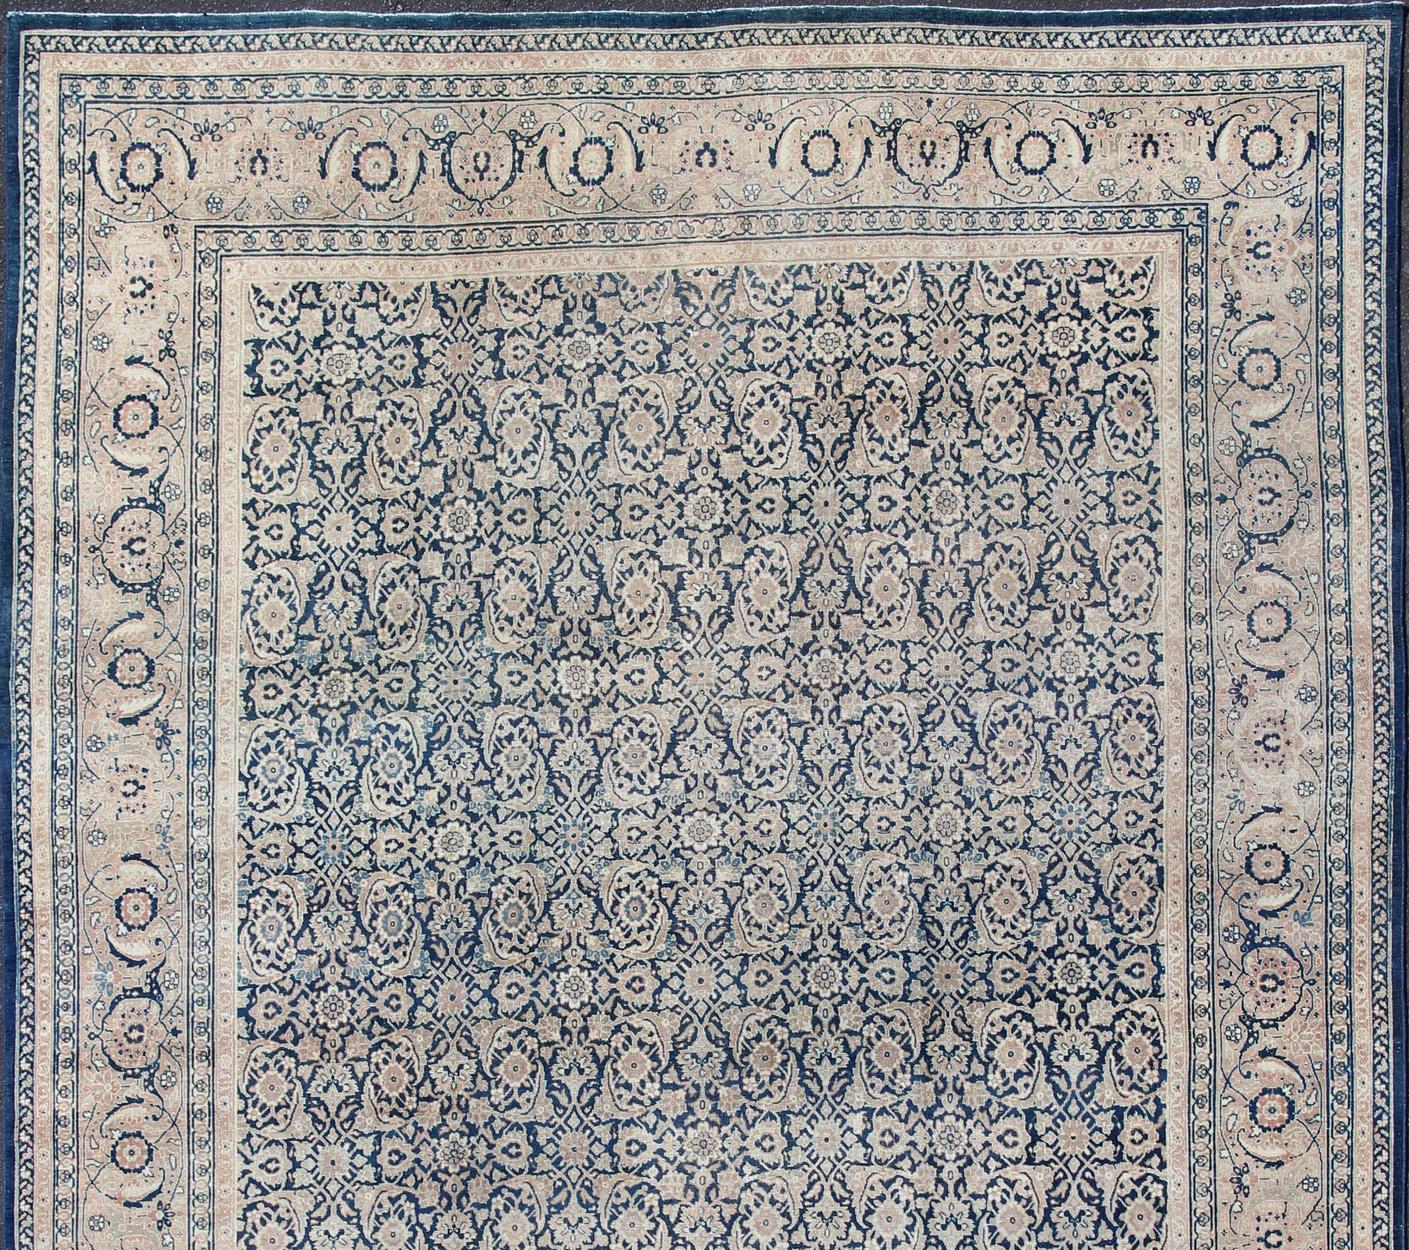 Antique Persian Tabriz carpet with geometric Herati design in dark blue tones. Dark blue, Navy blue, gray, taupe, tan and brown geometric Persian Tabriz rug. Keivan Woven Arts / rug 19-0404, country of origin / type: Iran / Tabriz, circa